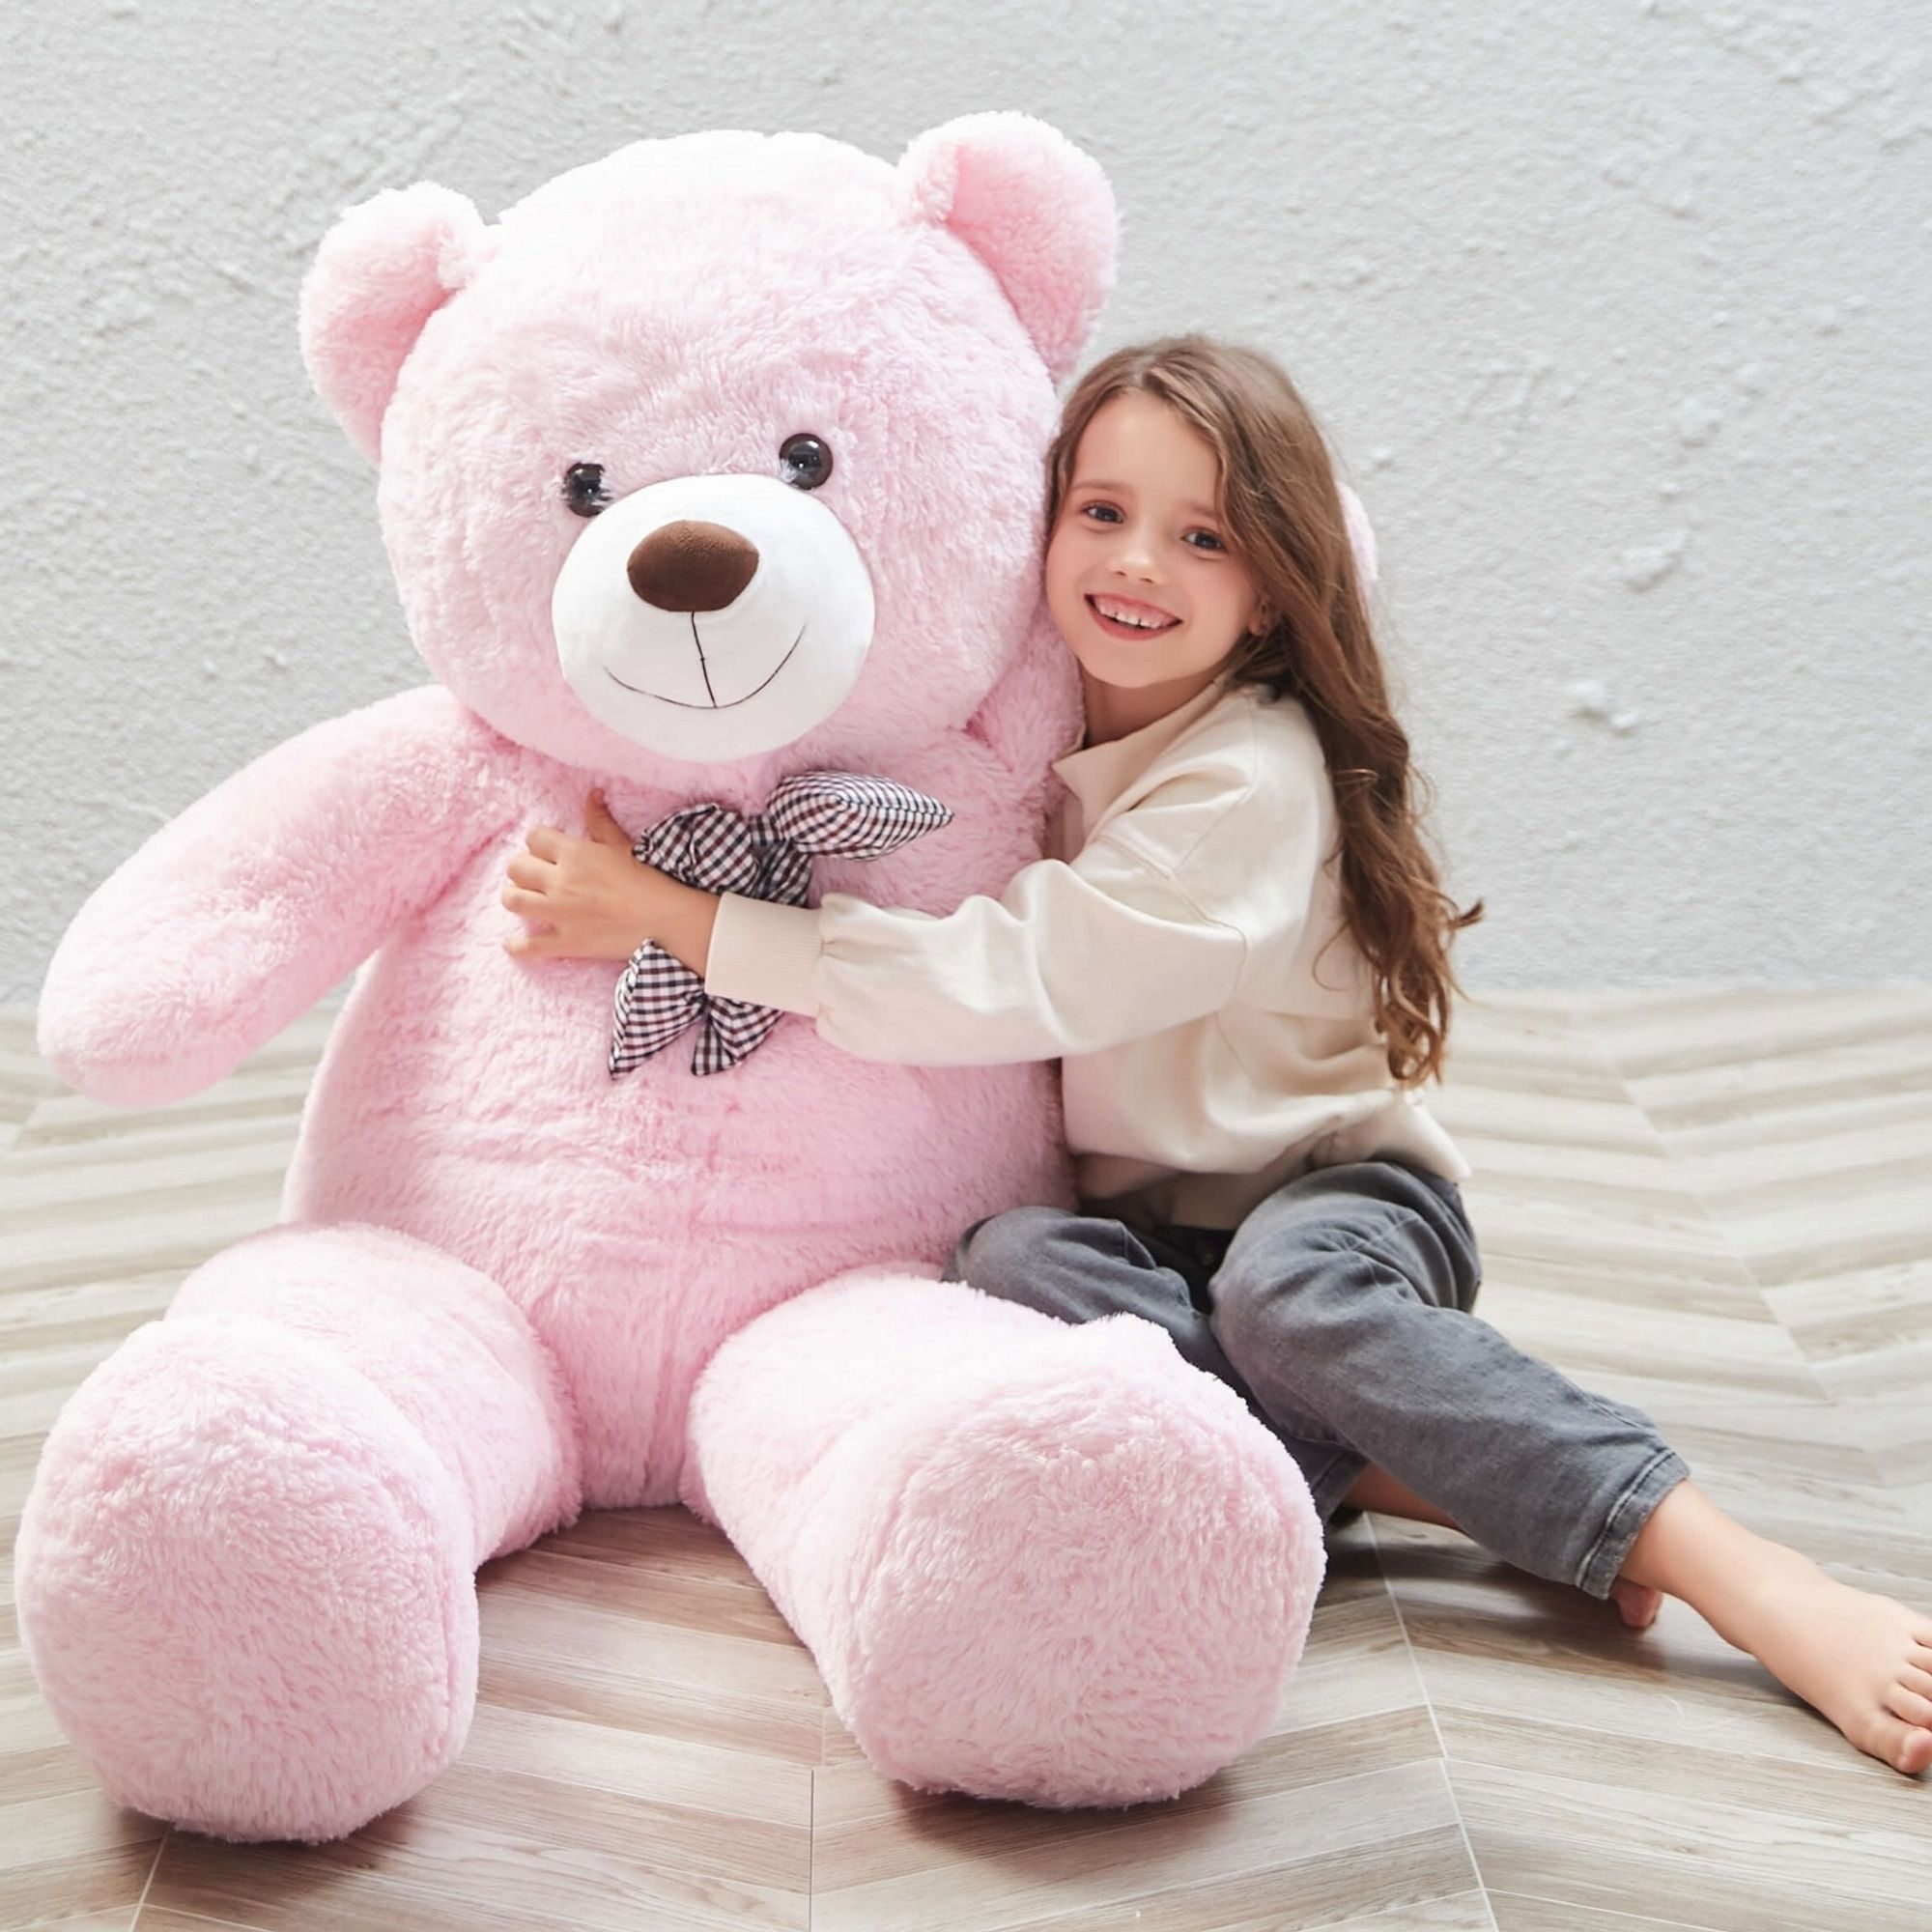 MorisMos Giant Teddy Bear 4ft Stuffed Animal Plush Toy 